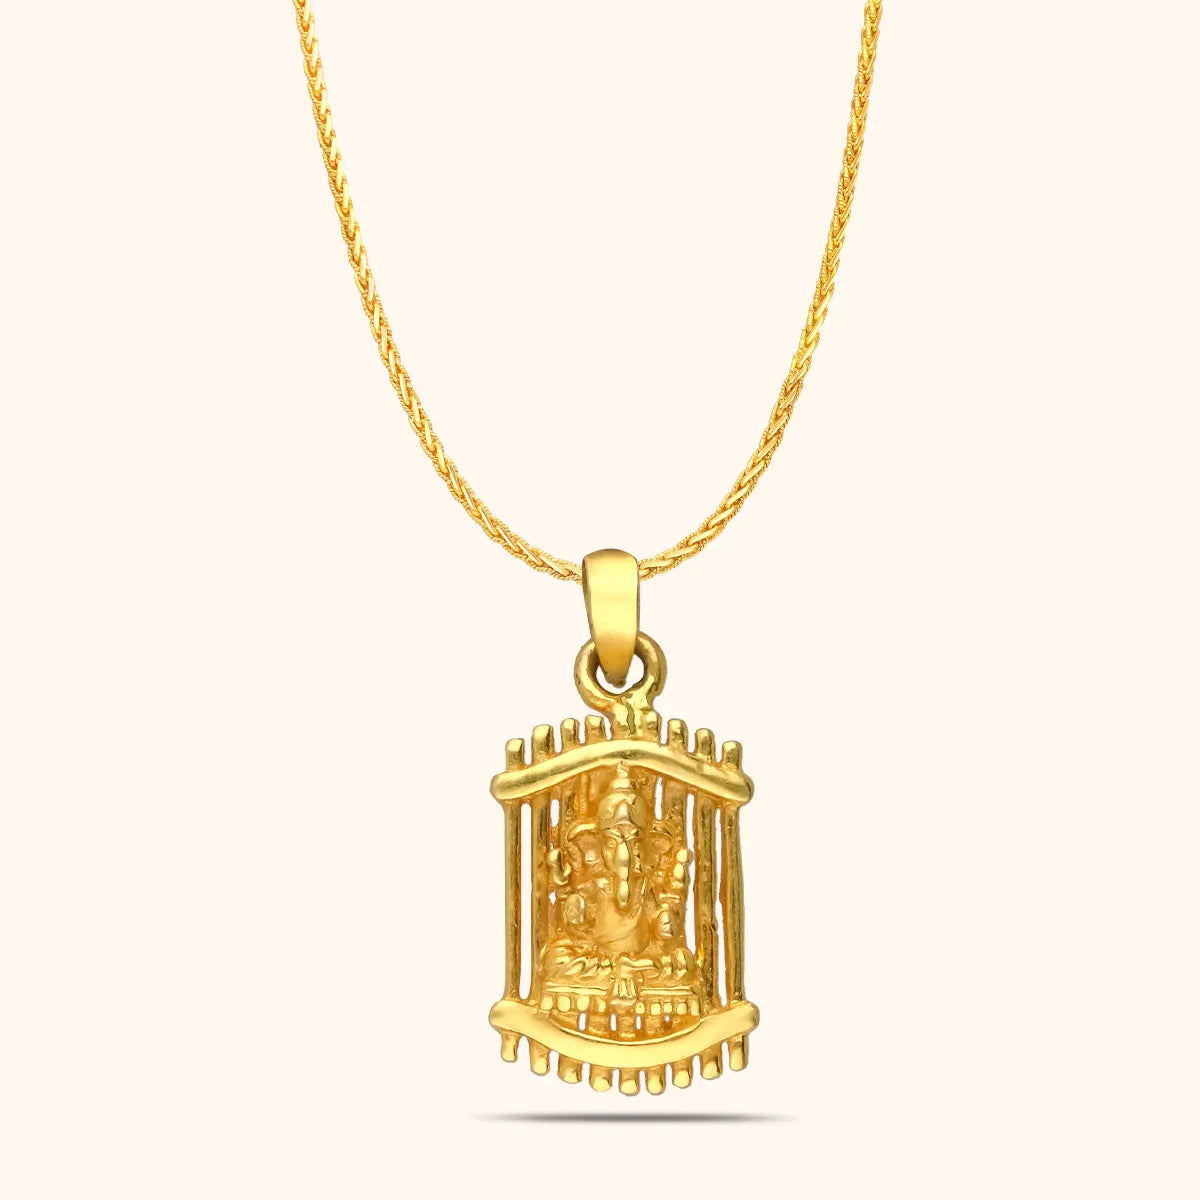 Ganesha Pendant - 22KT Gold